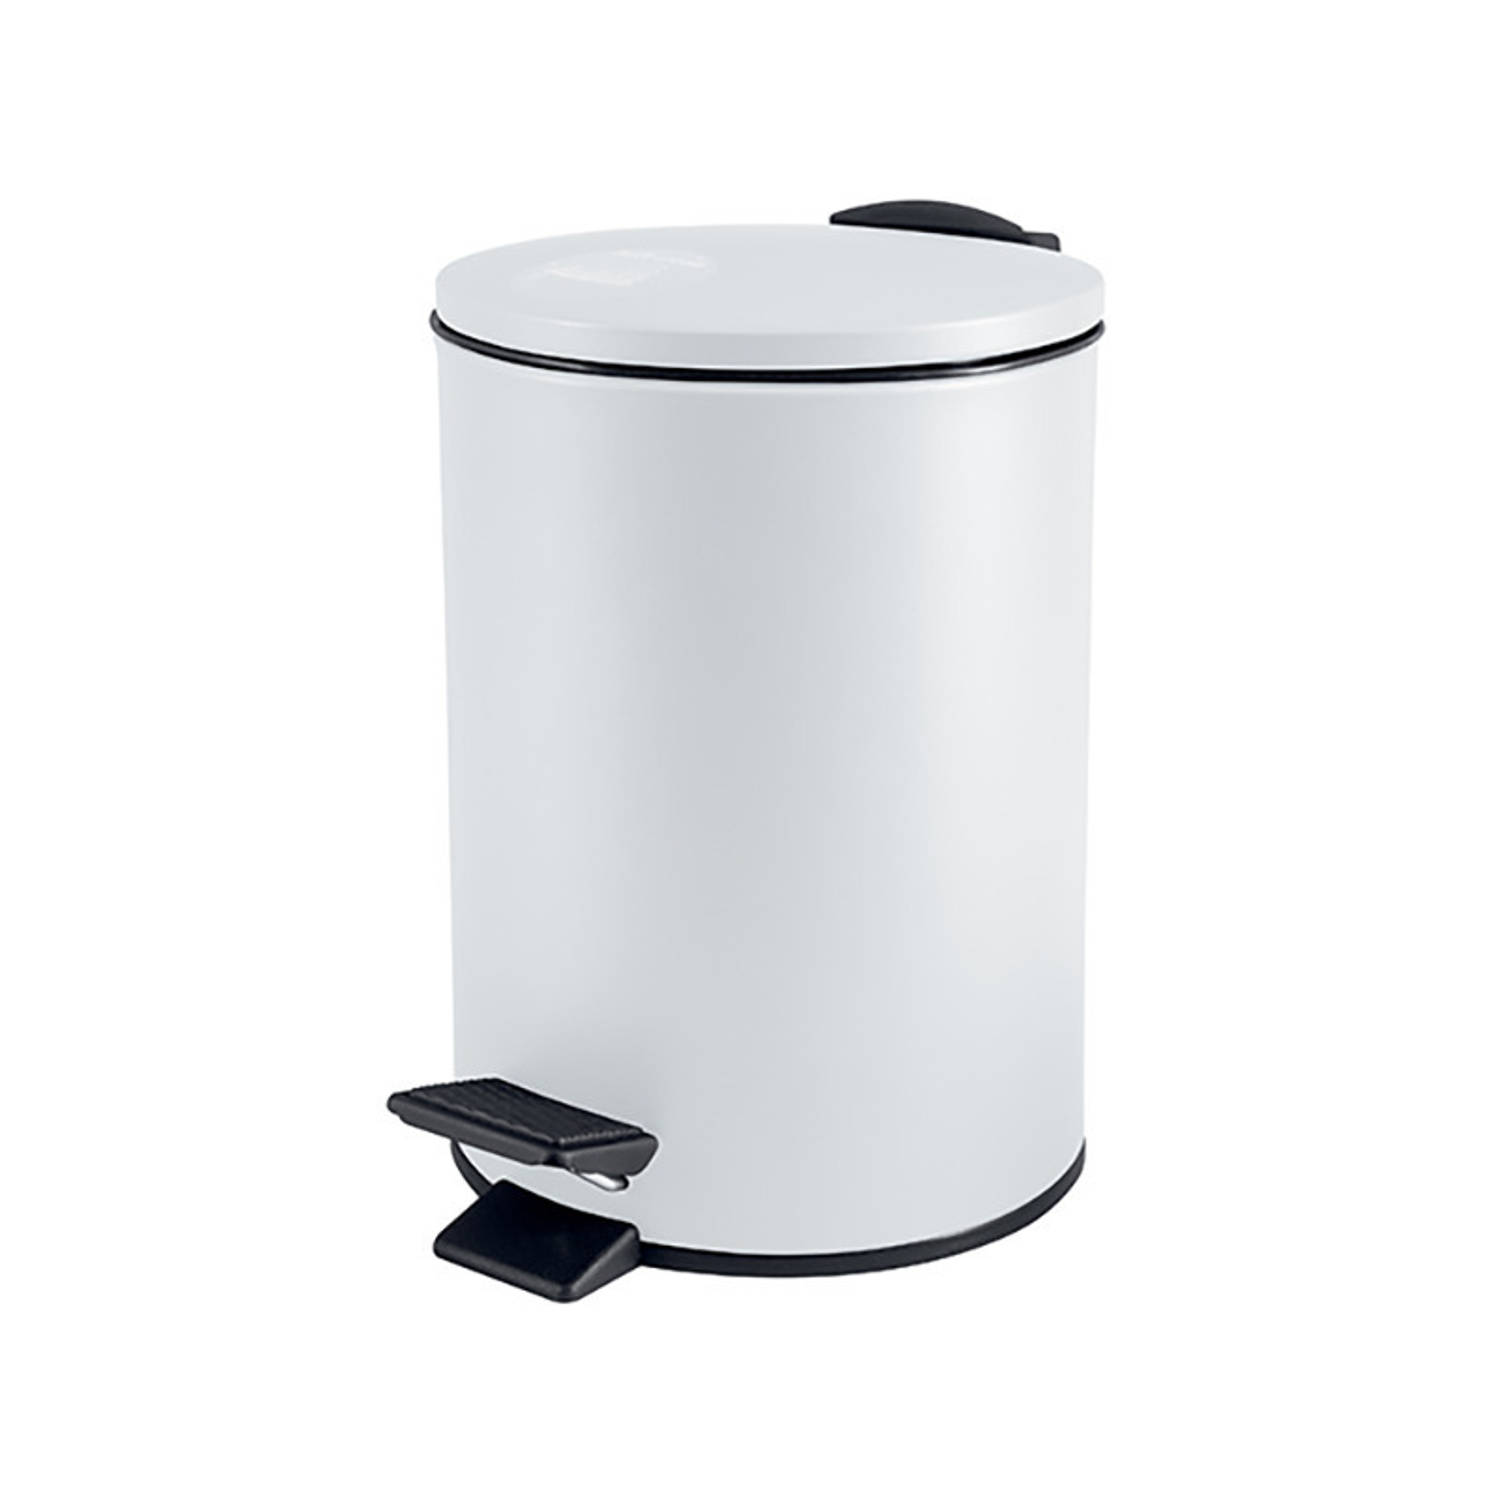 Spirella Pedaalemmer Cannes - wit - 5 liter - metaal - L20 x H27 cm - soft-close - toilet/badkamer